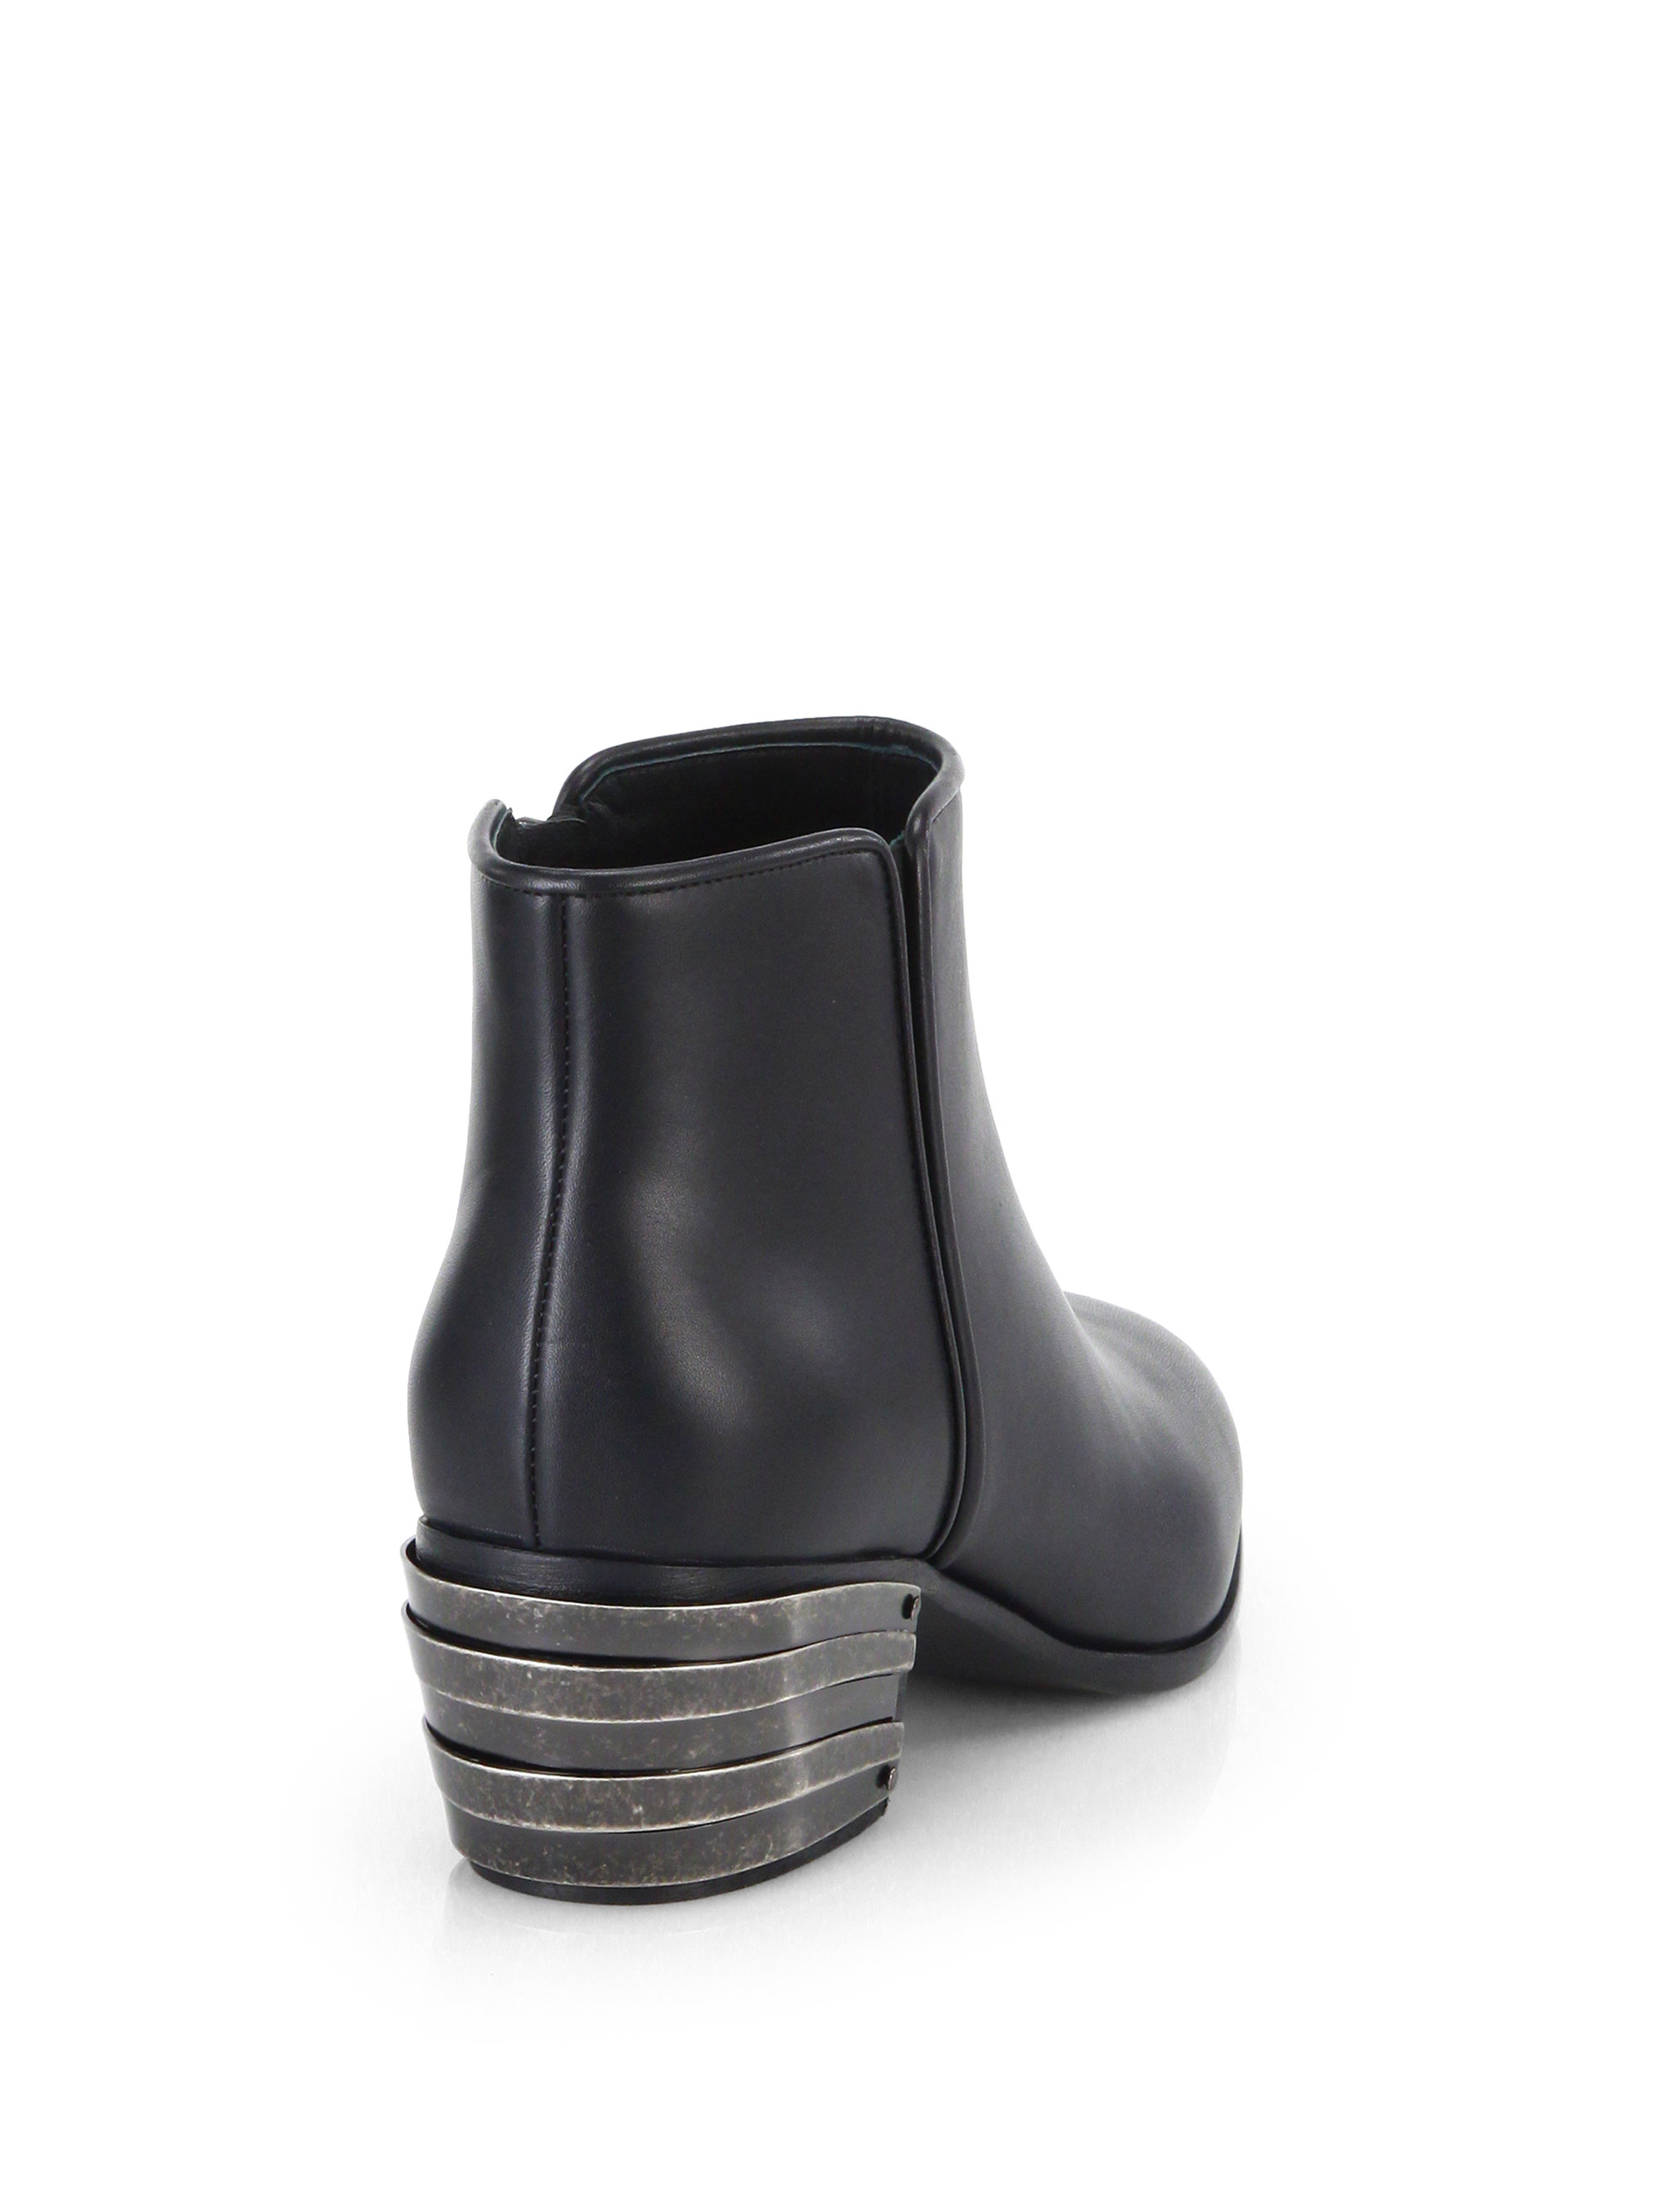 Giuseppe zanotti Metal Heel Leather Ankle Boots in Black for Men | Lyst